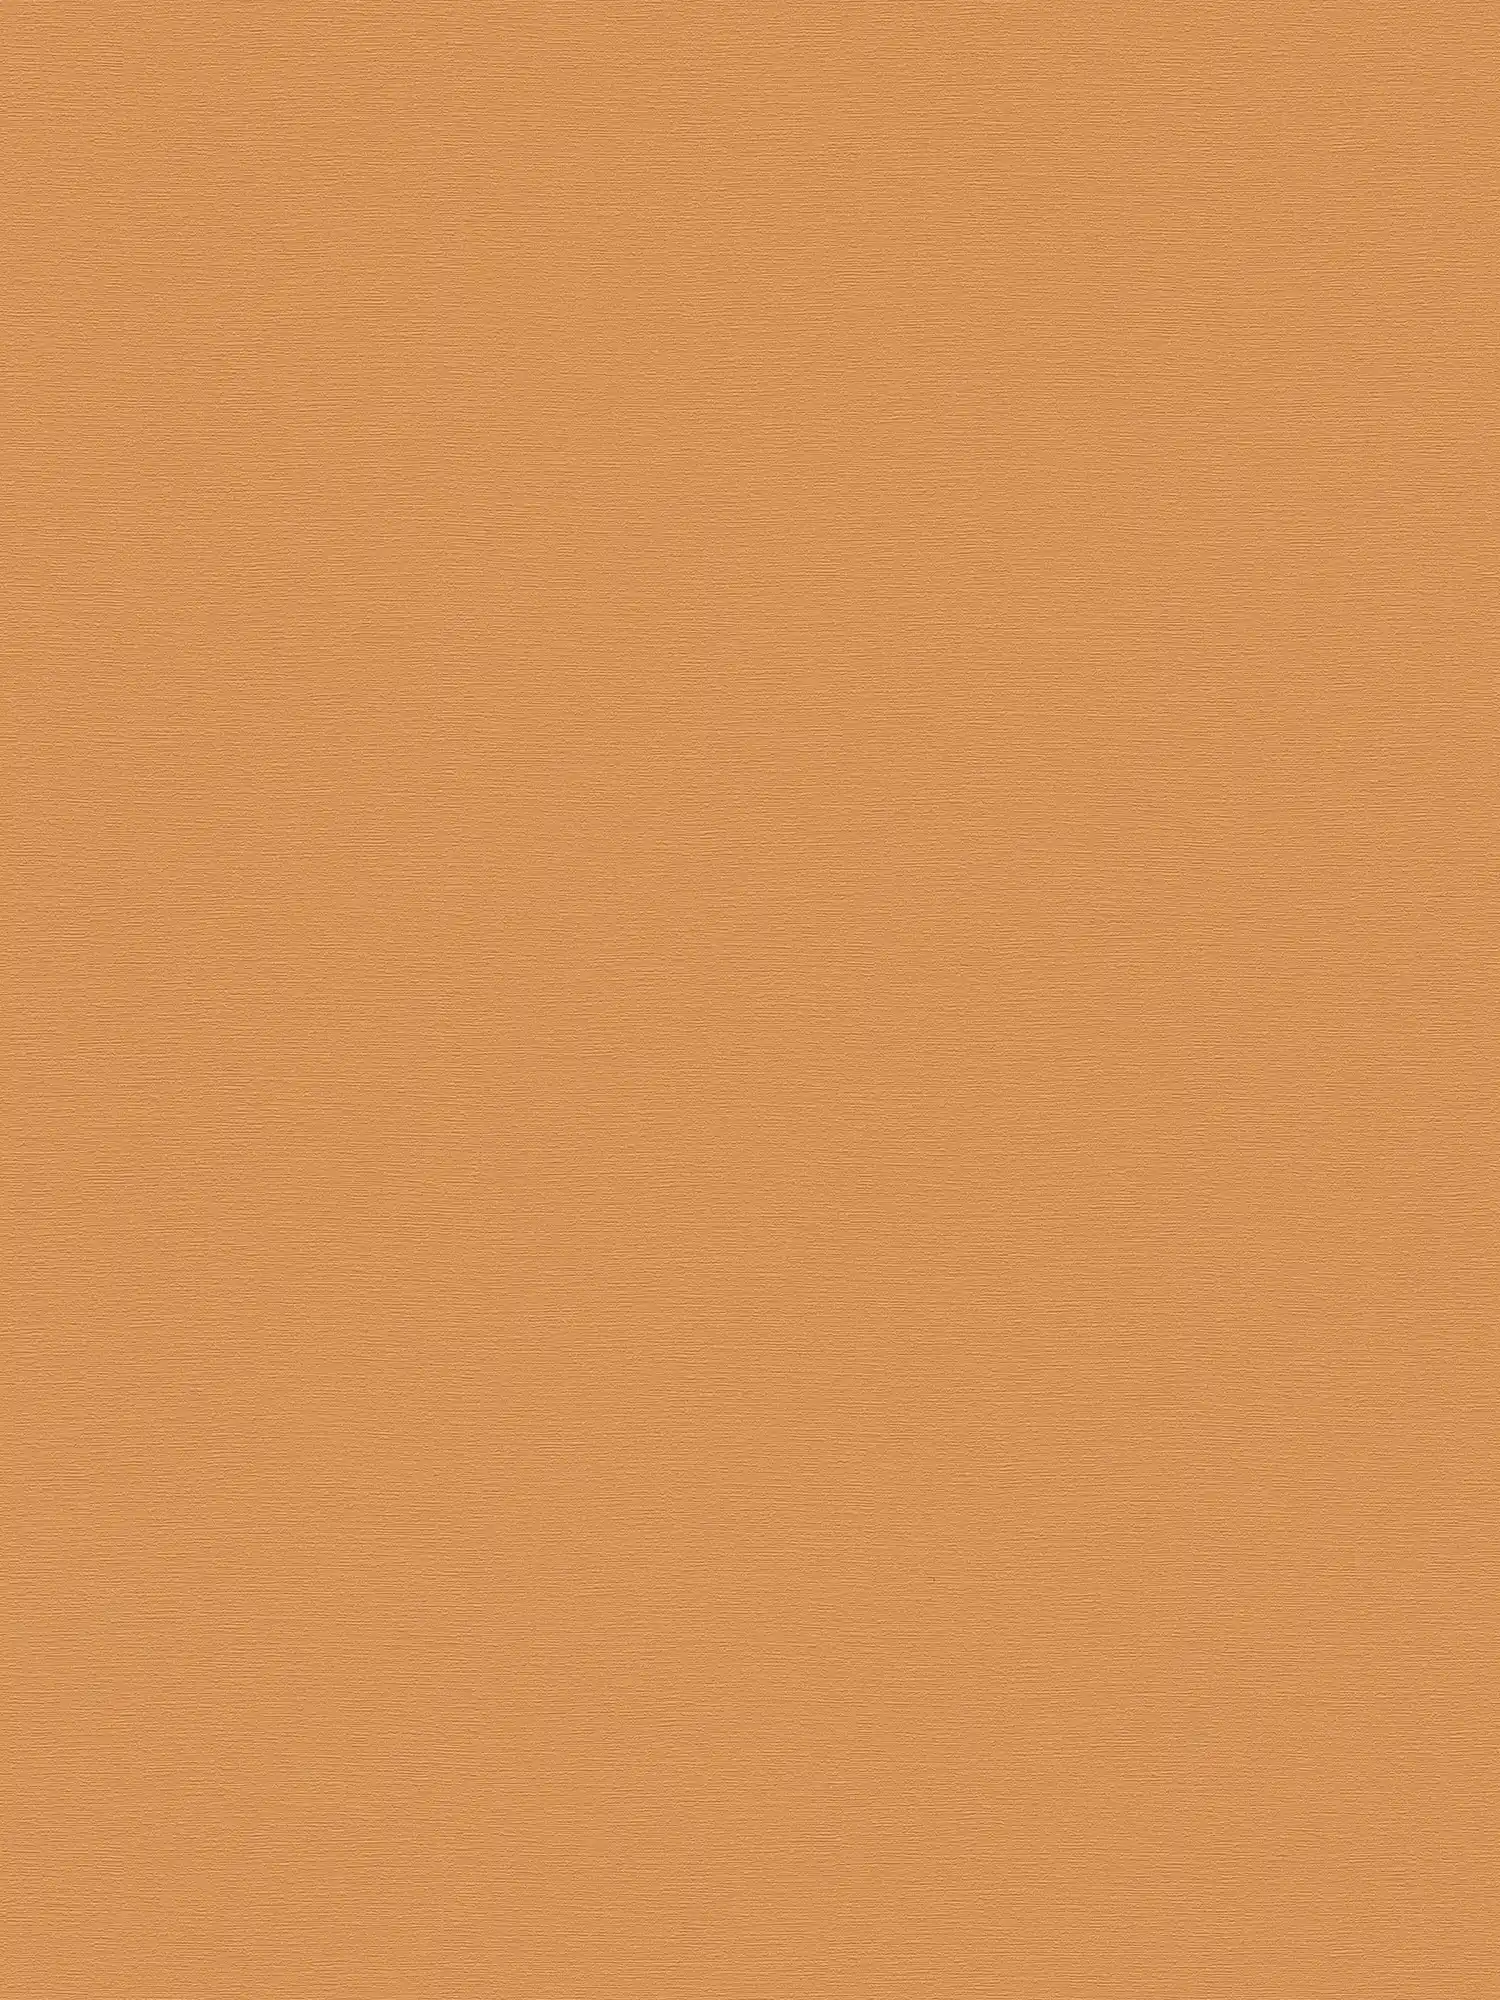 Papel pintado liso no tejido de textura fina - marrón, amarillo
